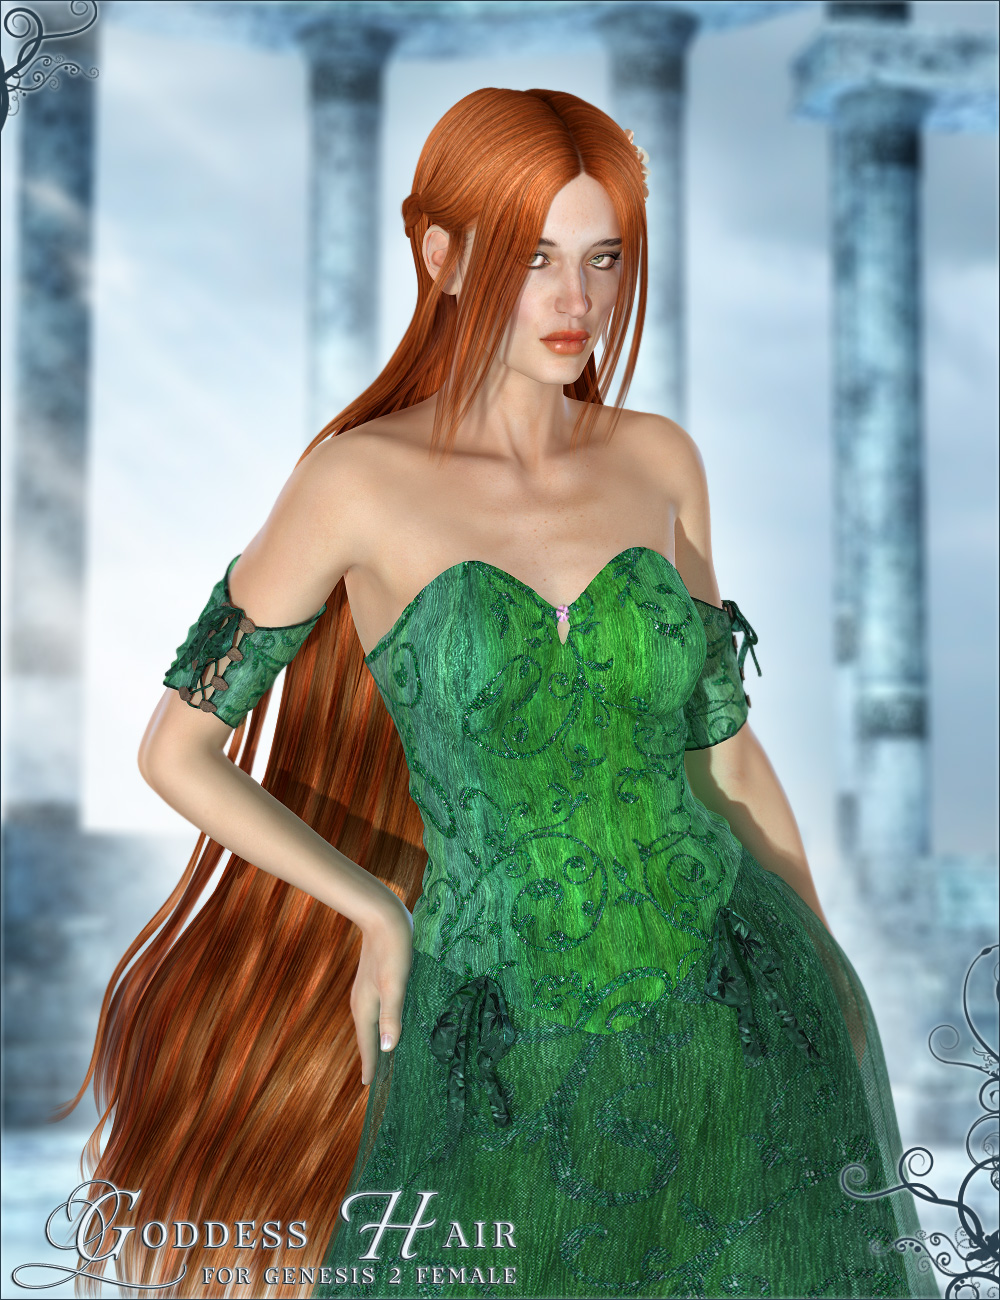 Goddess Hair by: Valea, 3D Models by Daz 3D